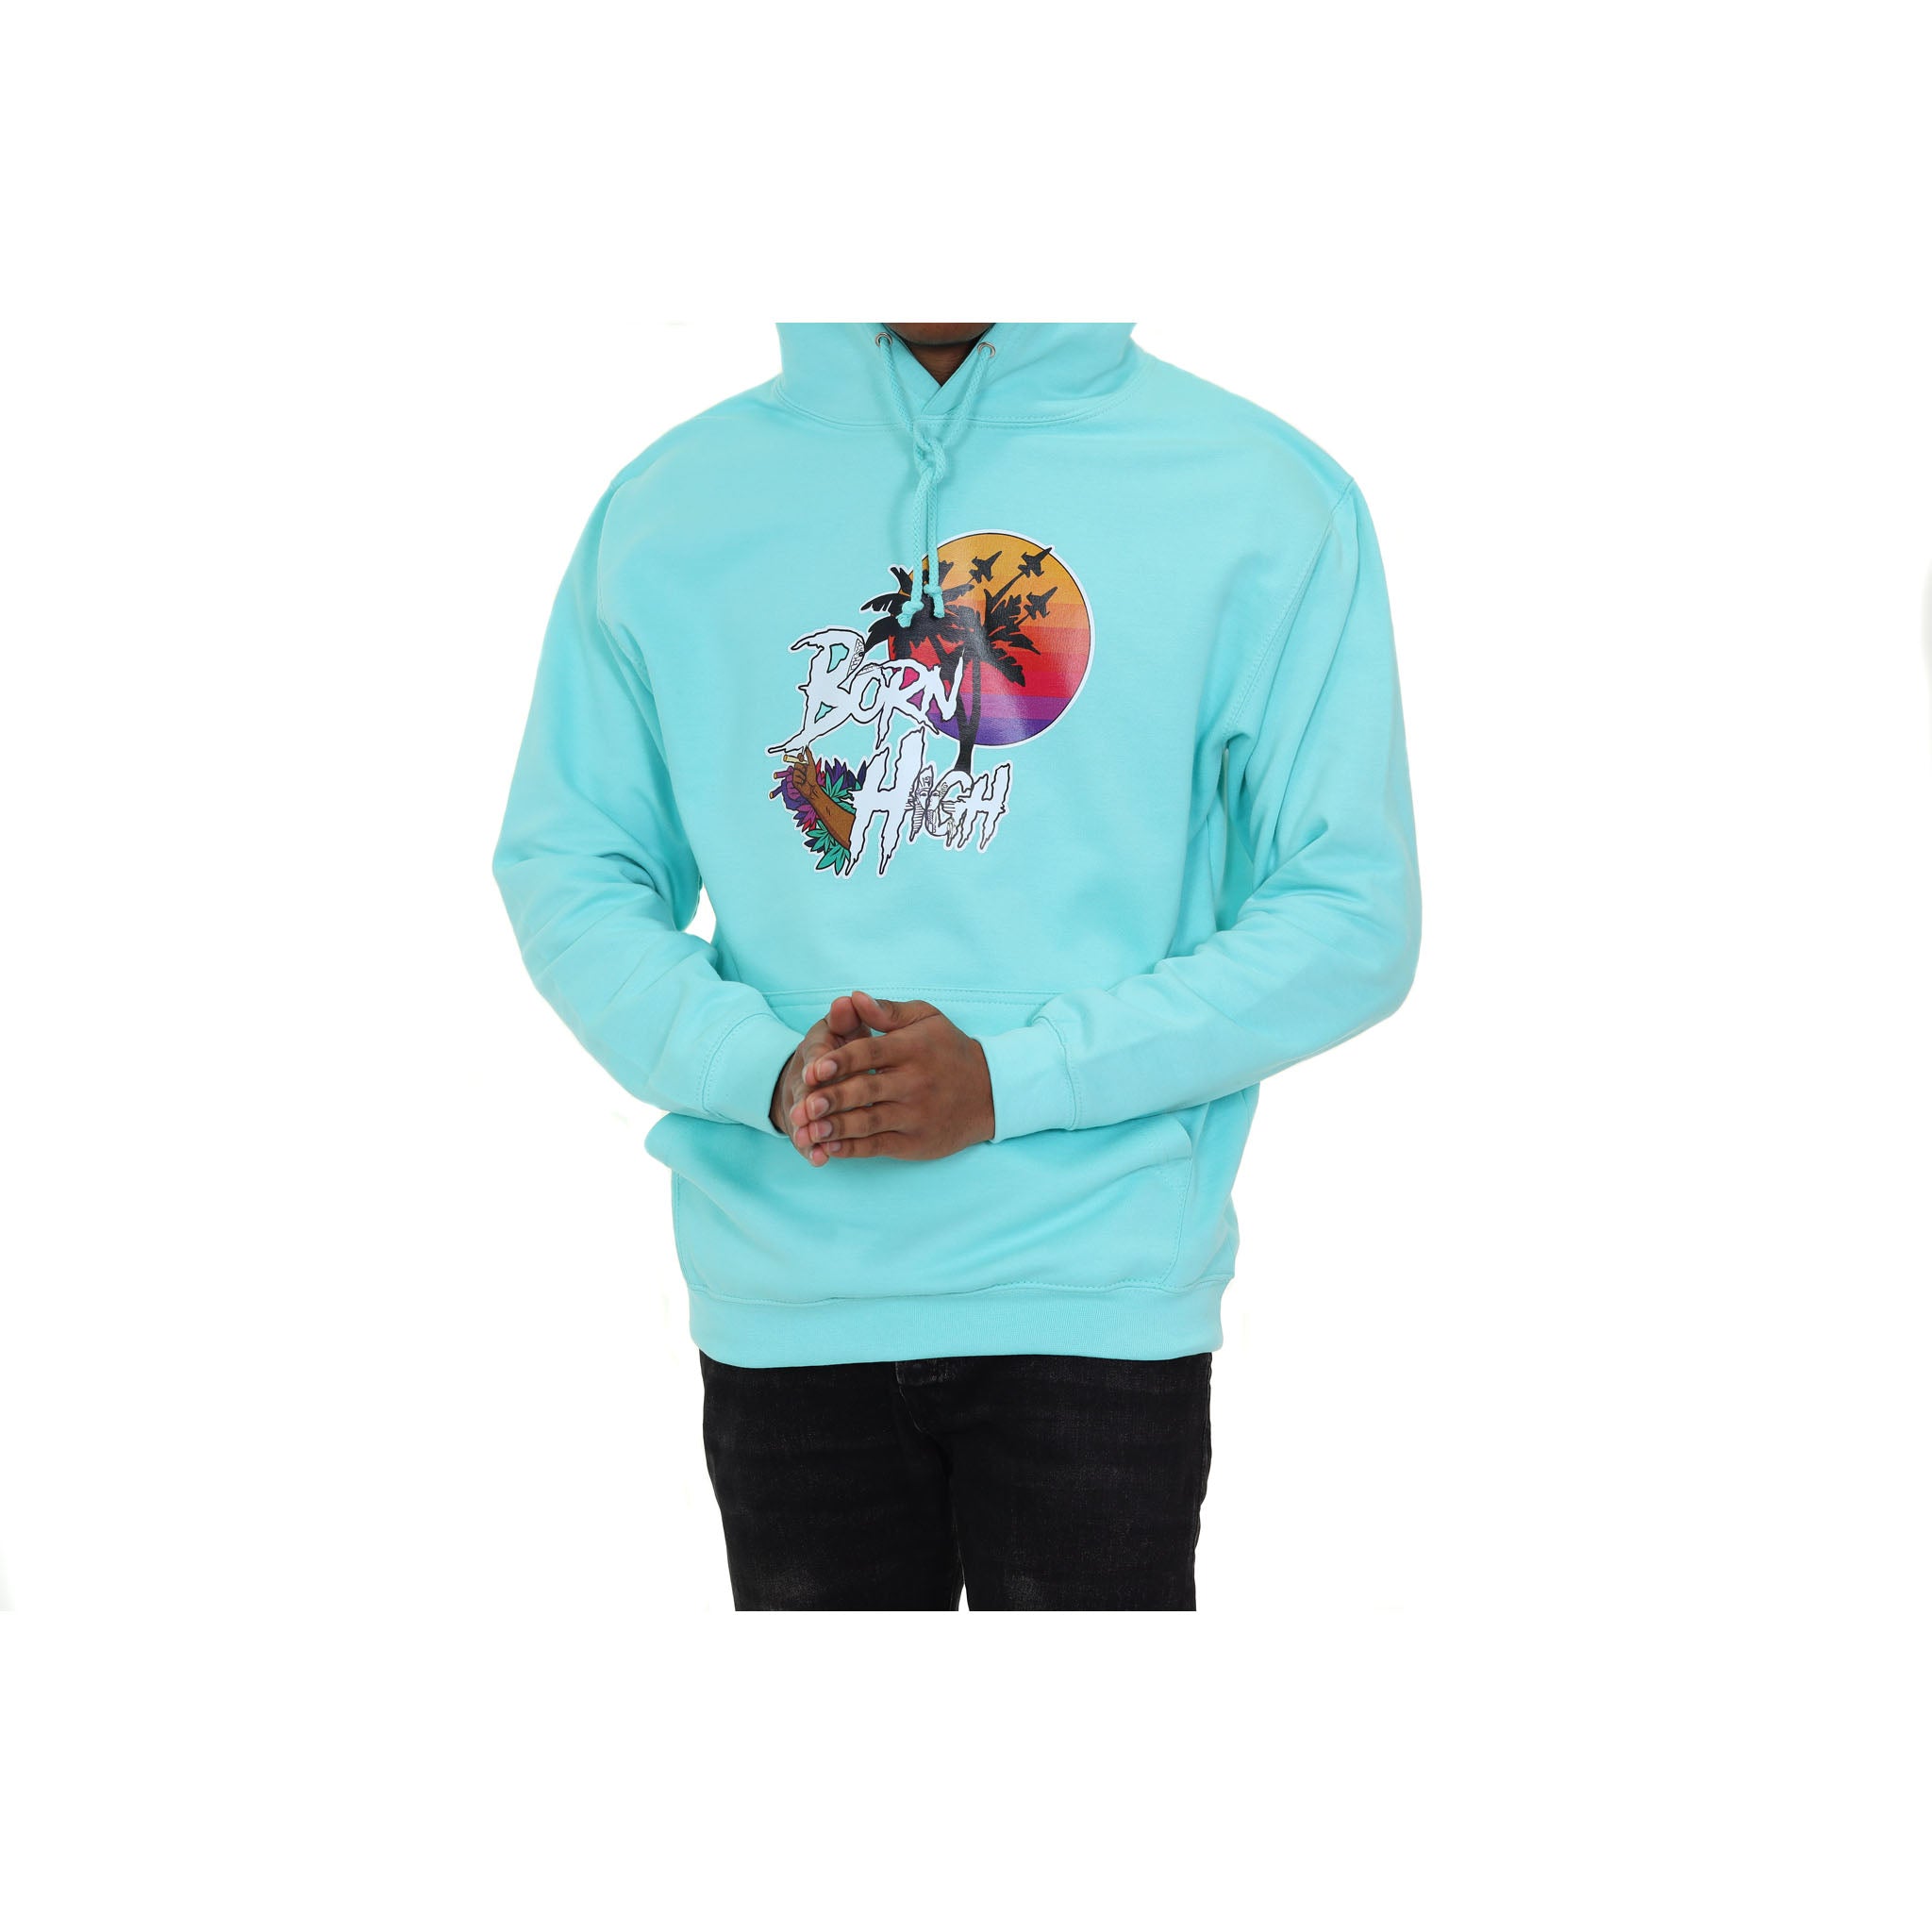 Bornh High Hooded Miami Vibes Sweatshirt